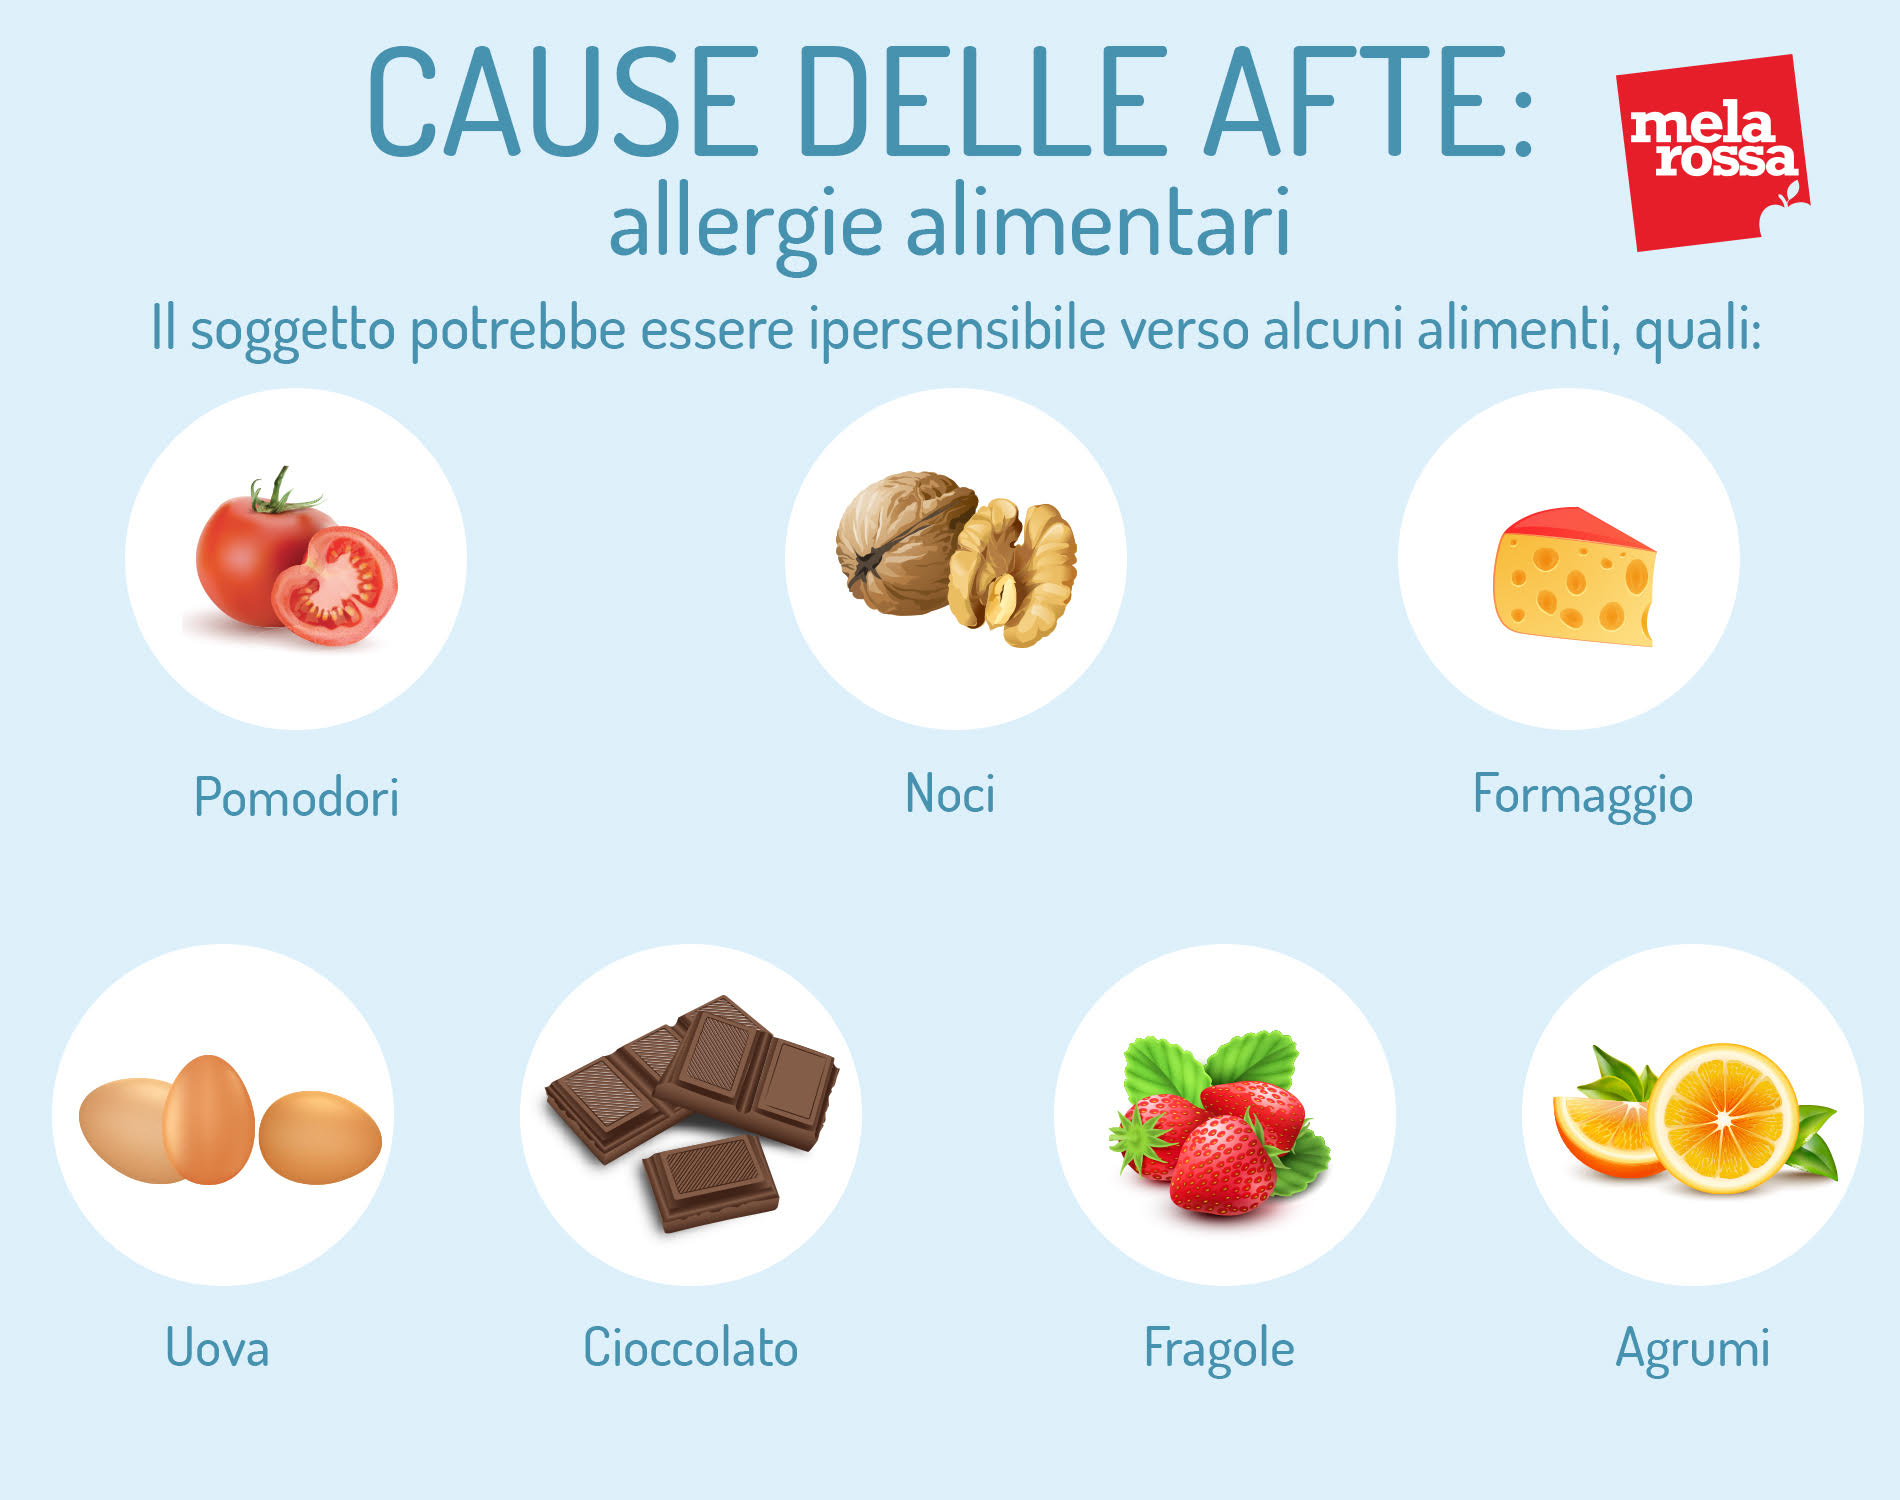 Cause delle afte: allergie alimentari 